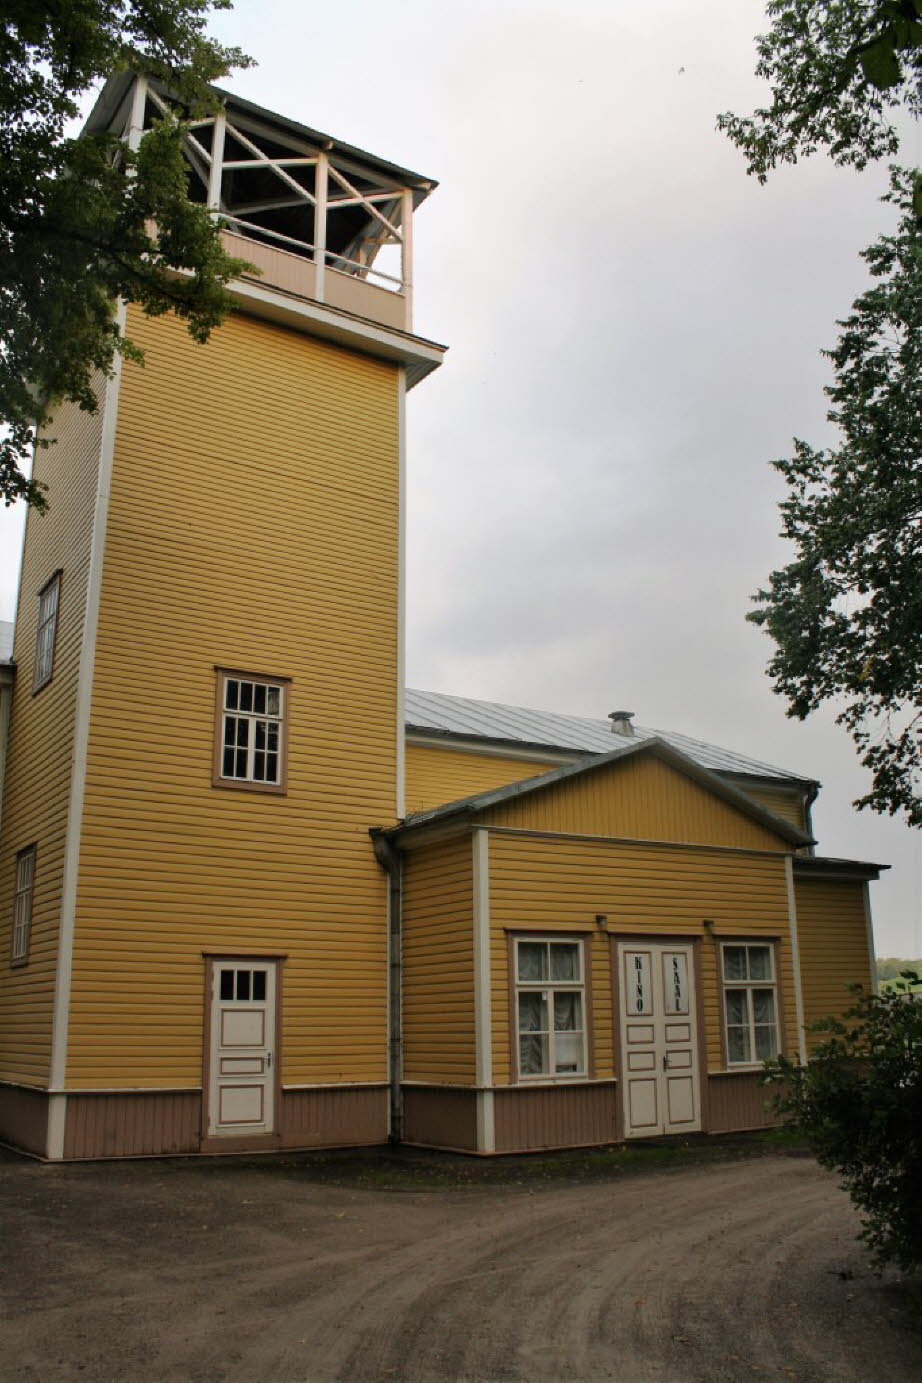 Kuressaare auf der Insel Saaremaa